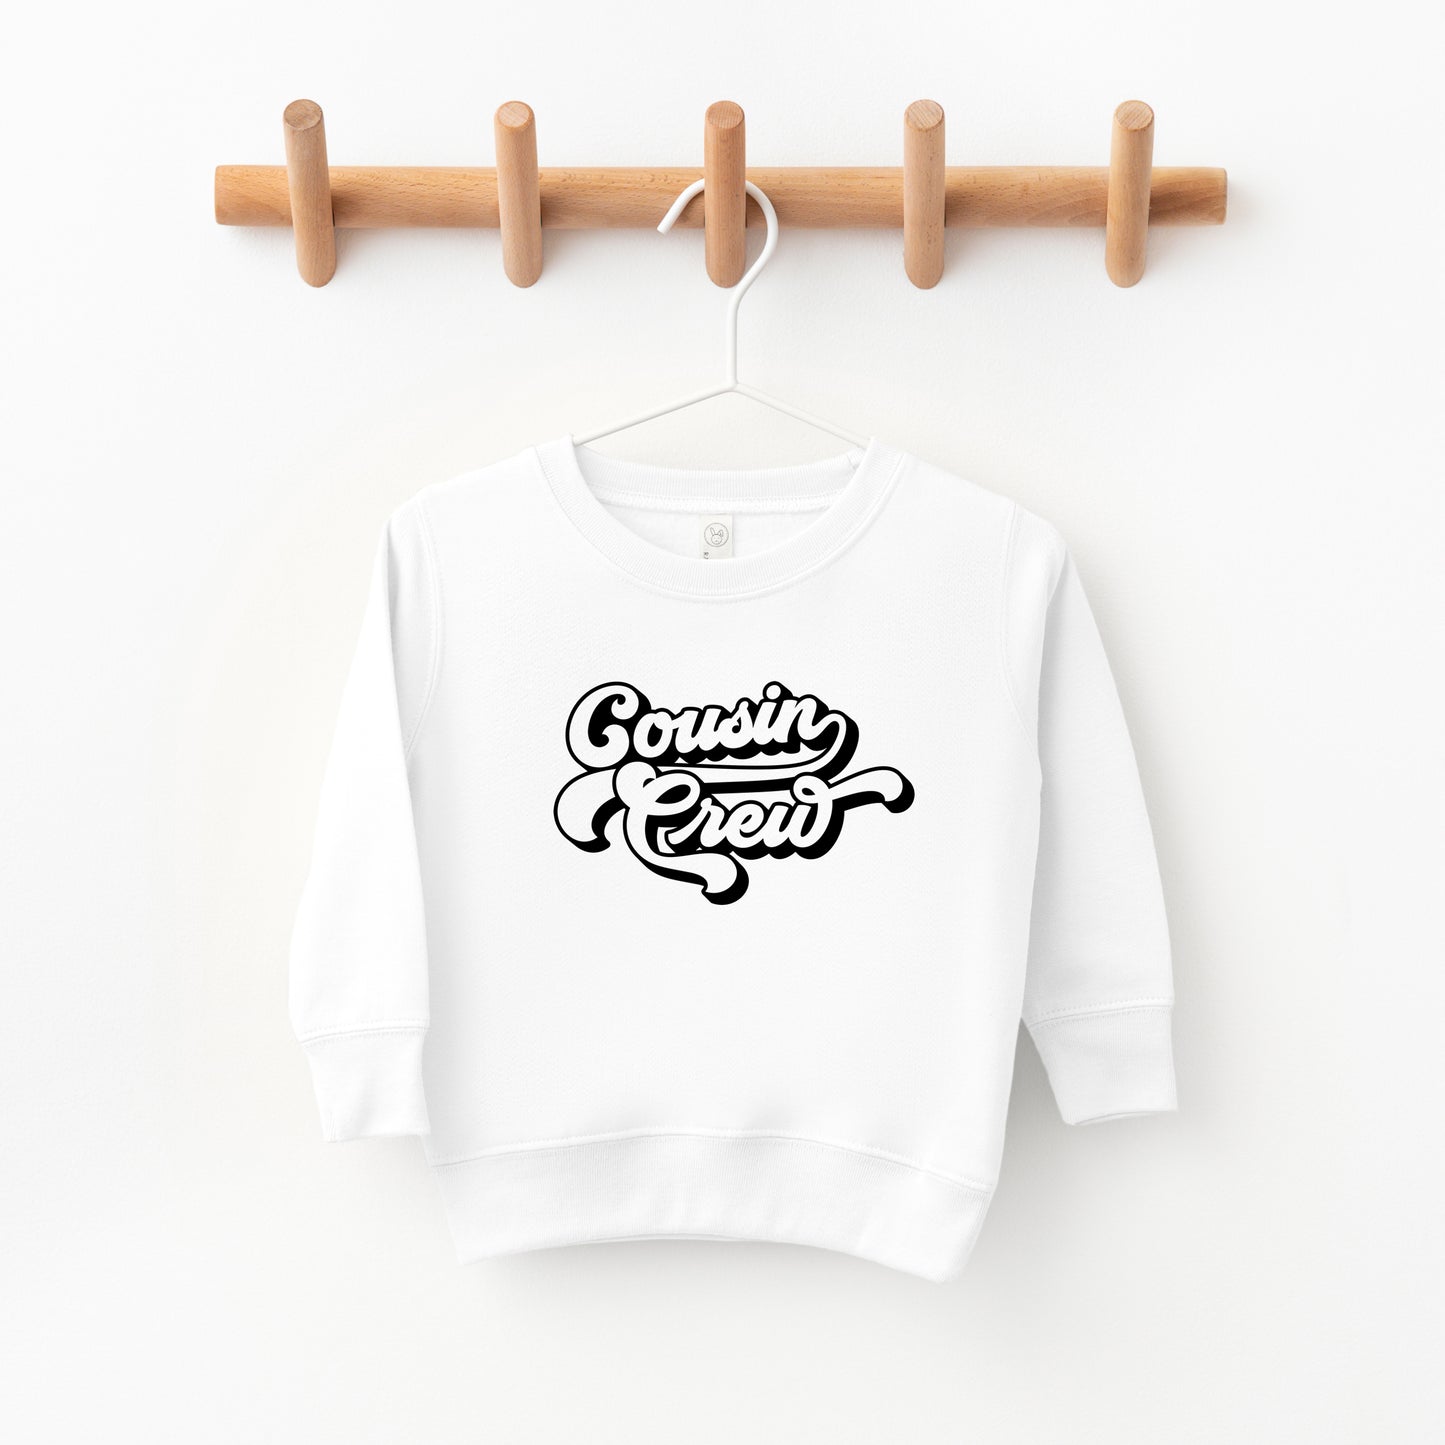 Retro Cousin Crew | Toddler Sweatshirt